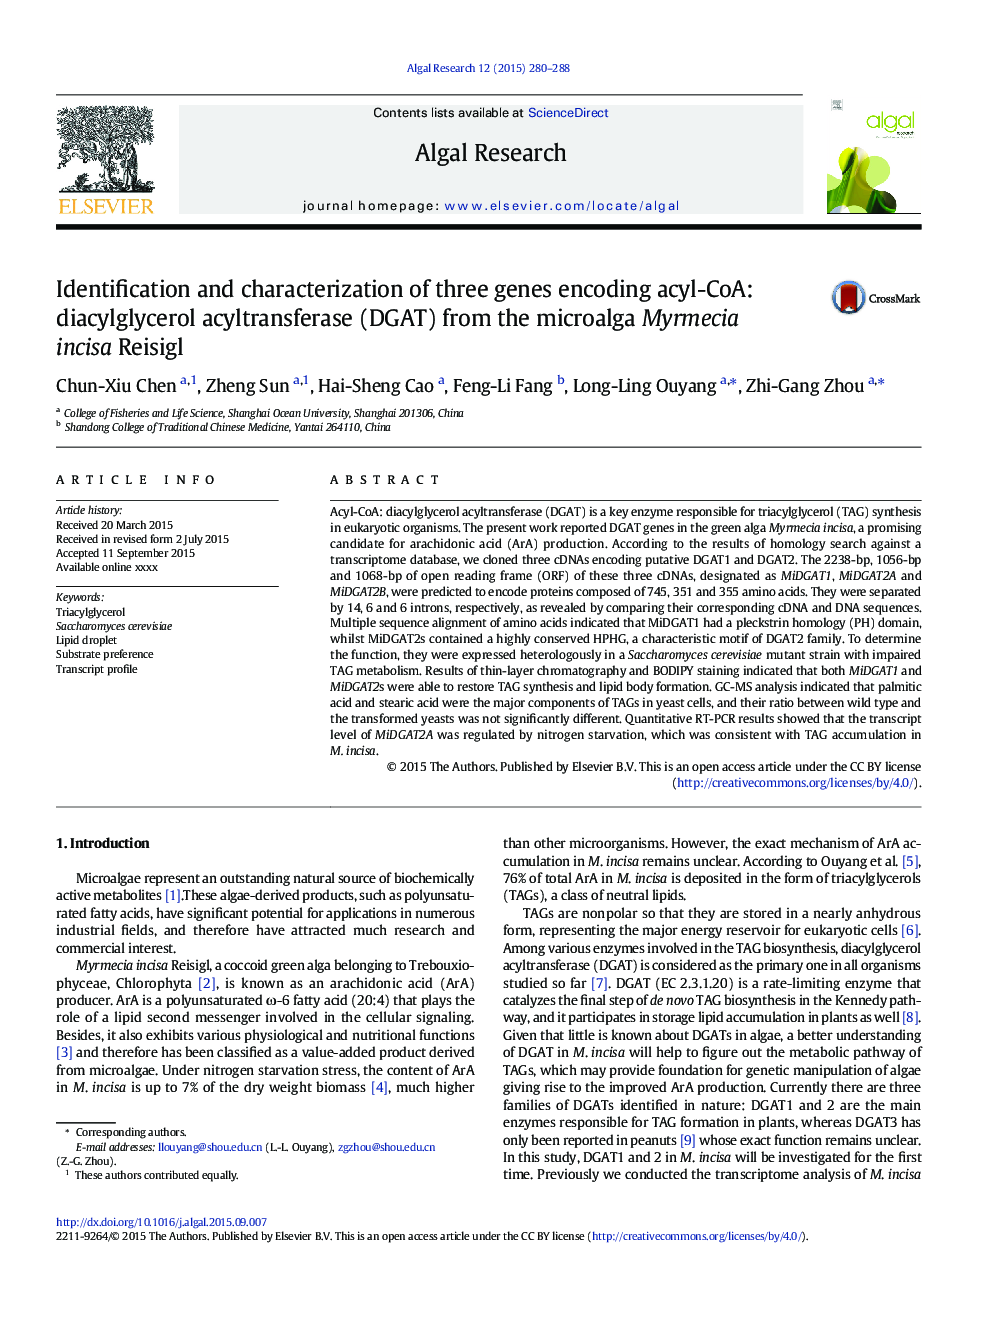 Identification and characterization of three genes encoding acyl-CoA: diacylglycerol acyltransferase (DGAT) from the microalga Myrmecia incisa Reisigl